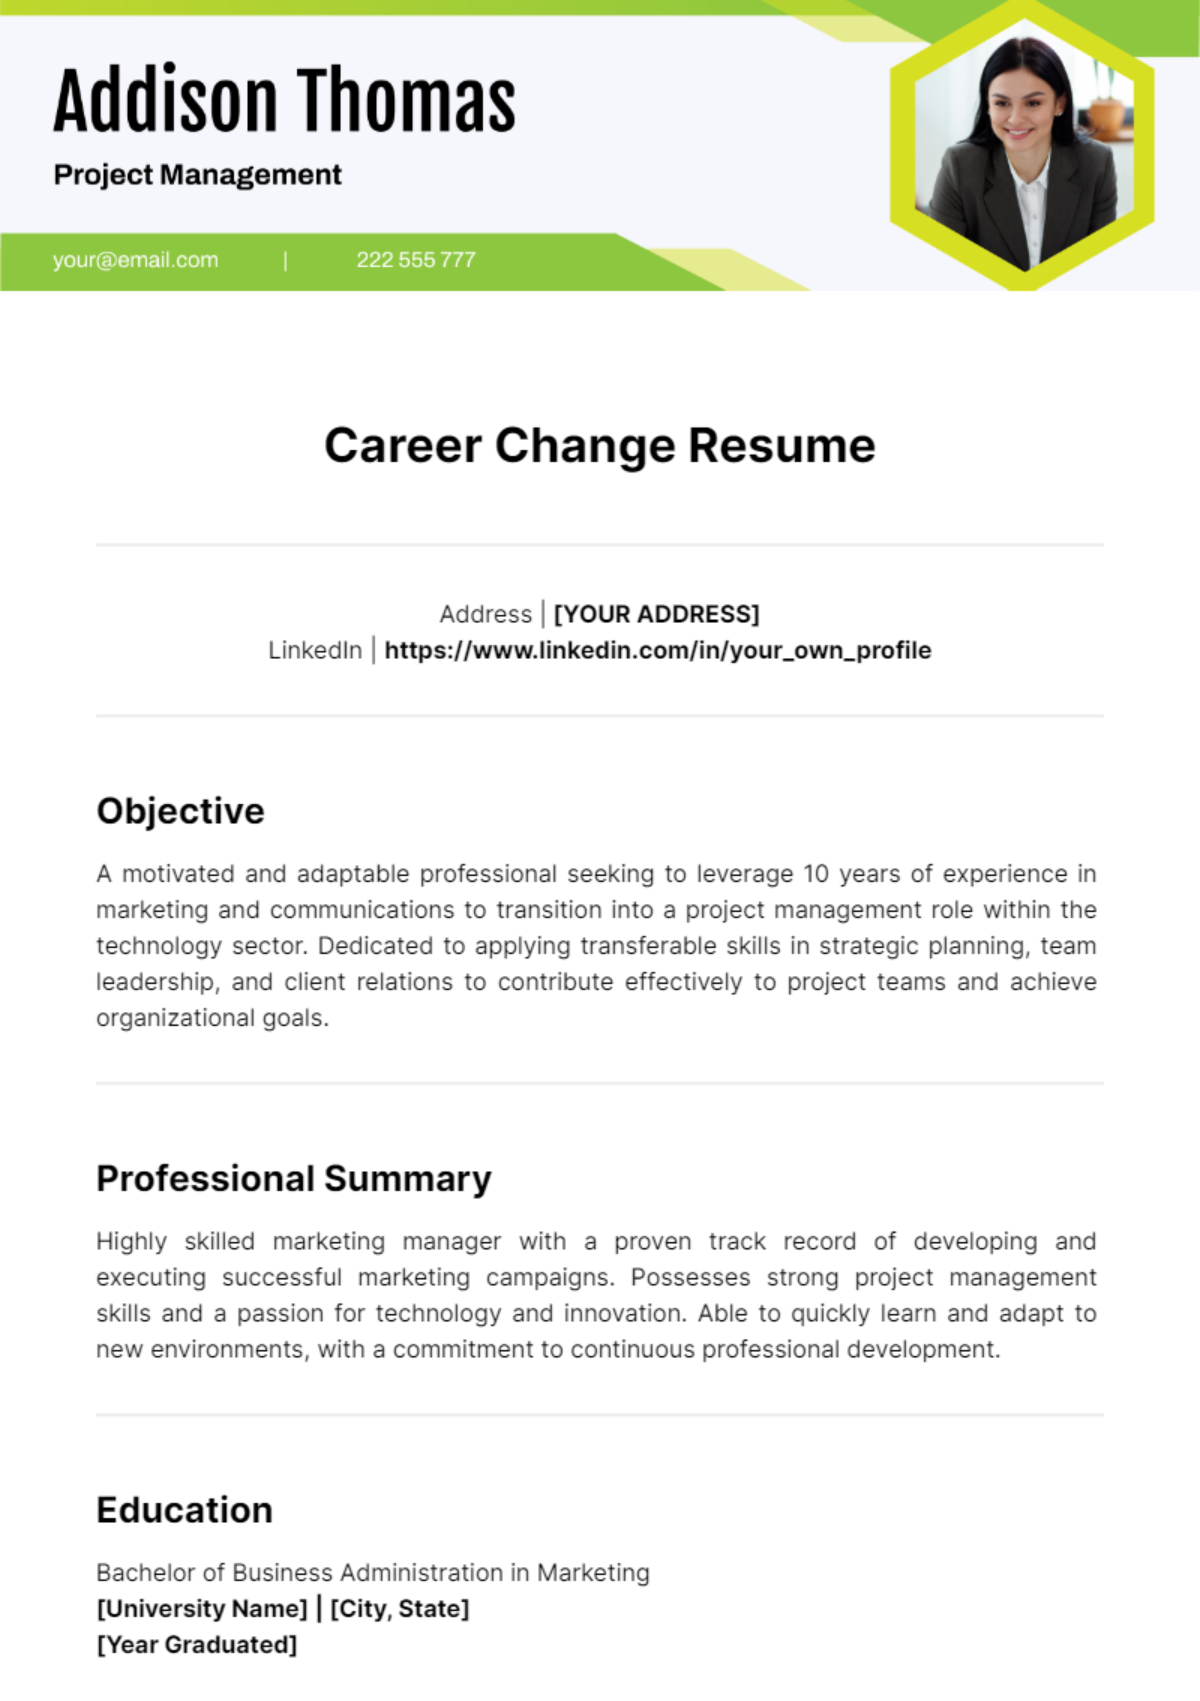 Career Change Resume Template